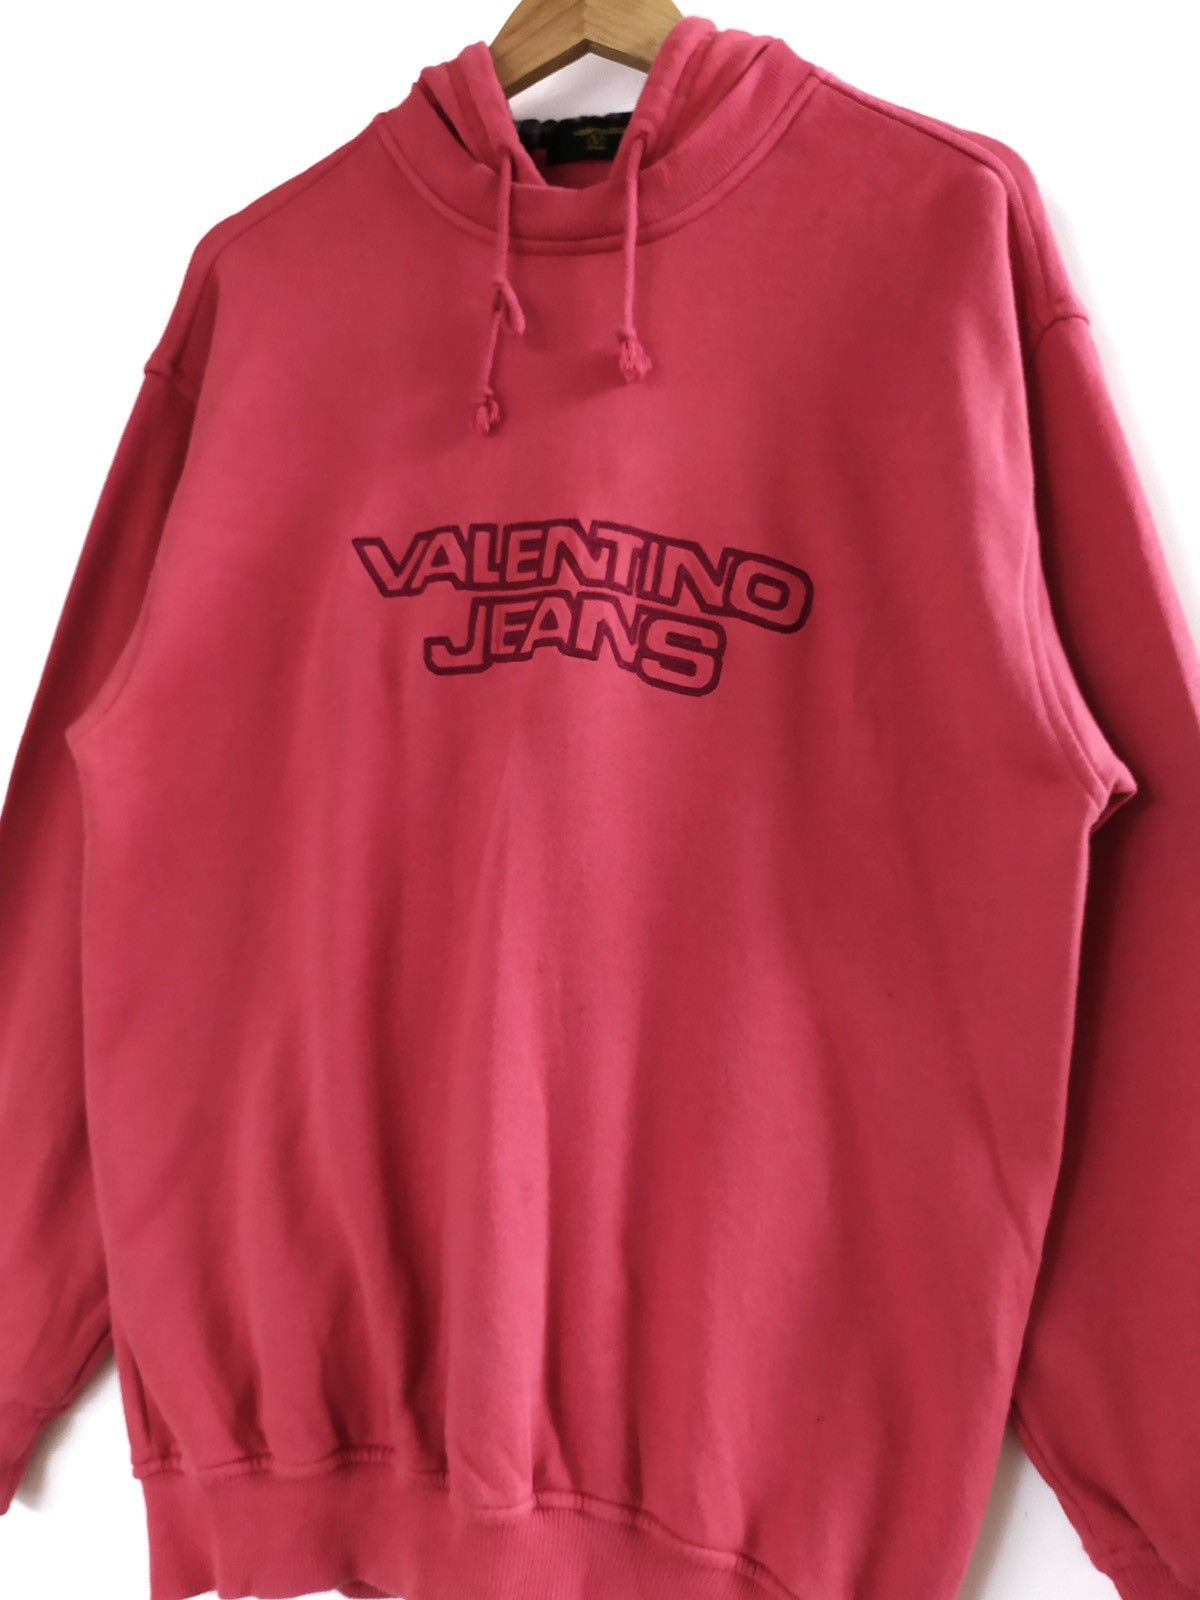 Valentino Jeans Big Logo Hoodie Sweatshirt - 3